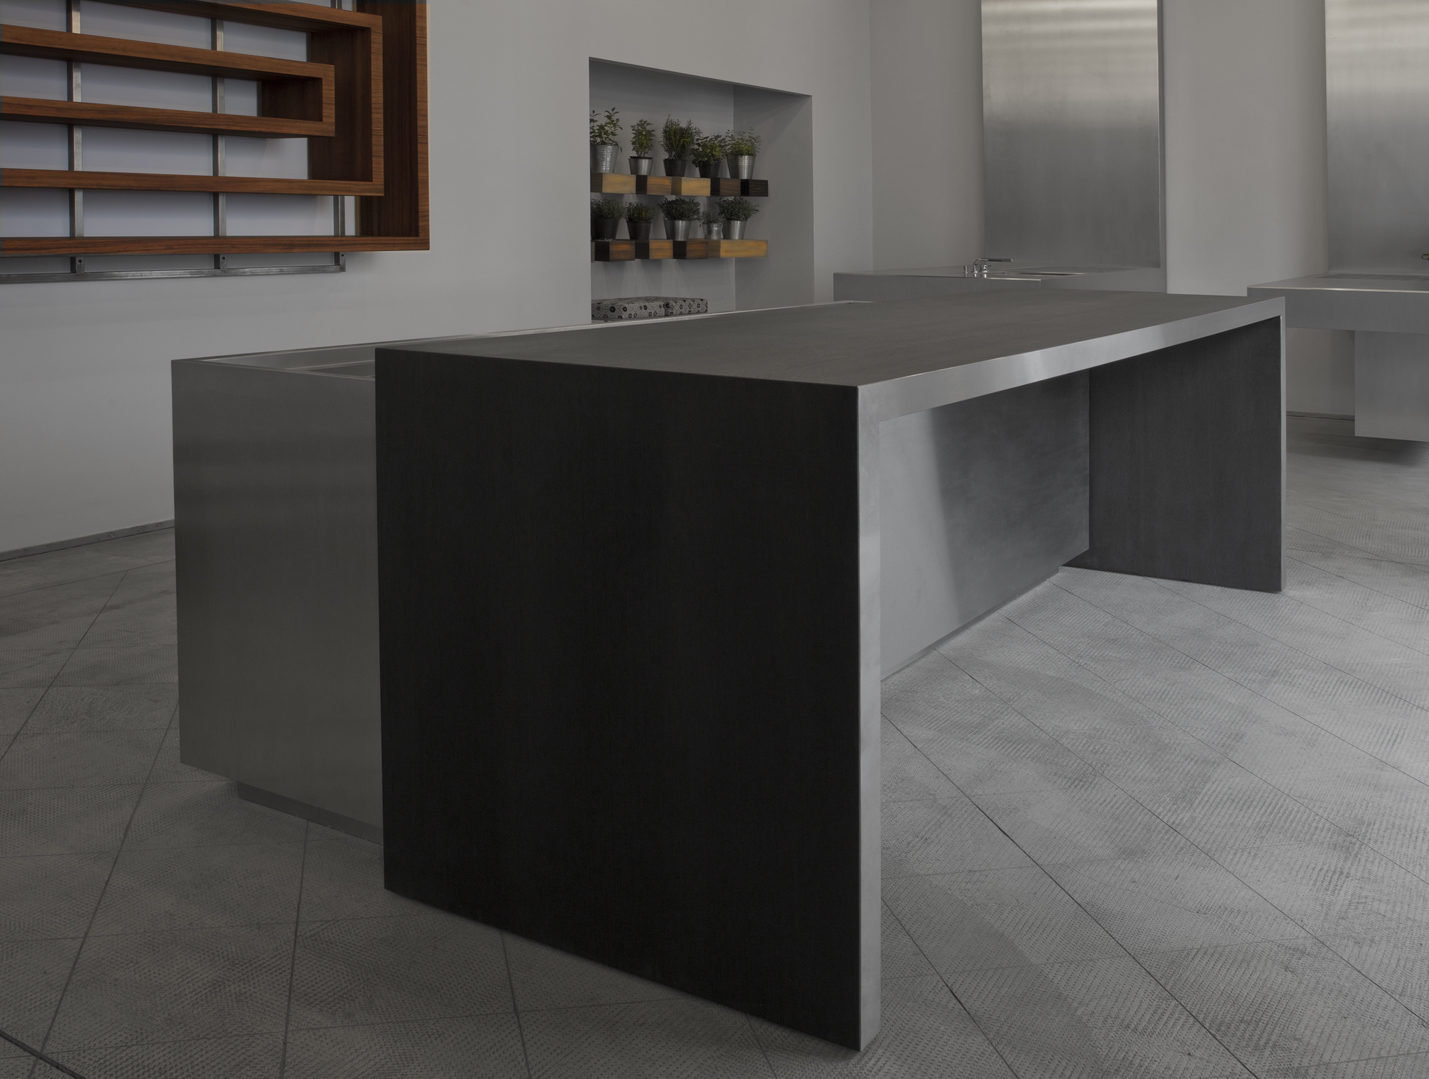 Strato_design_SEMPLICE#4_kitchen island with sliding bar counter_Oak wood dark brown_mat stainless steel_2014_04